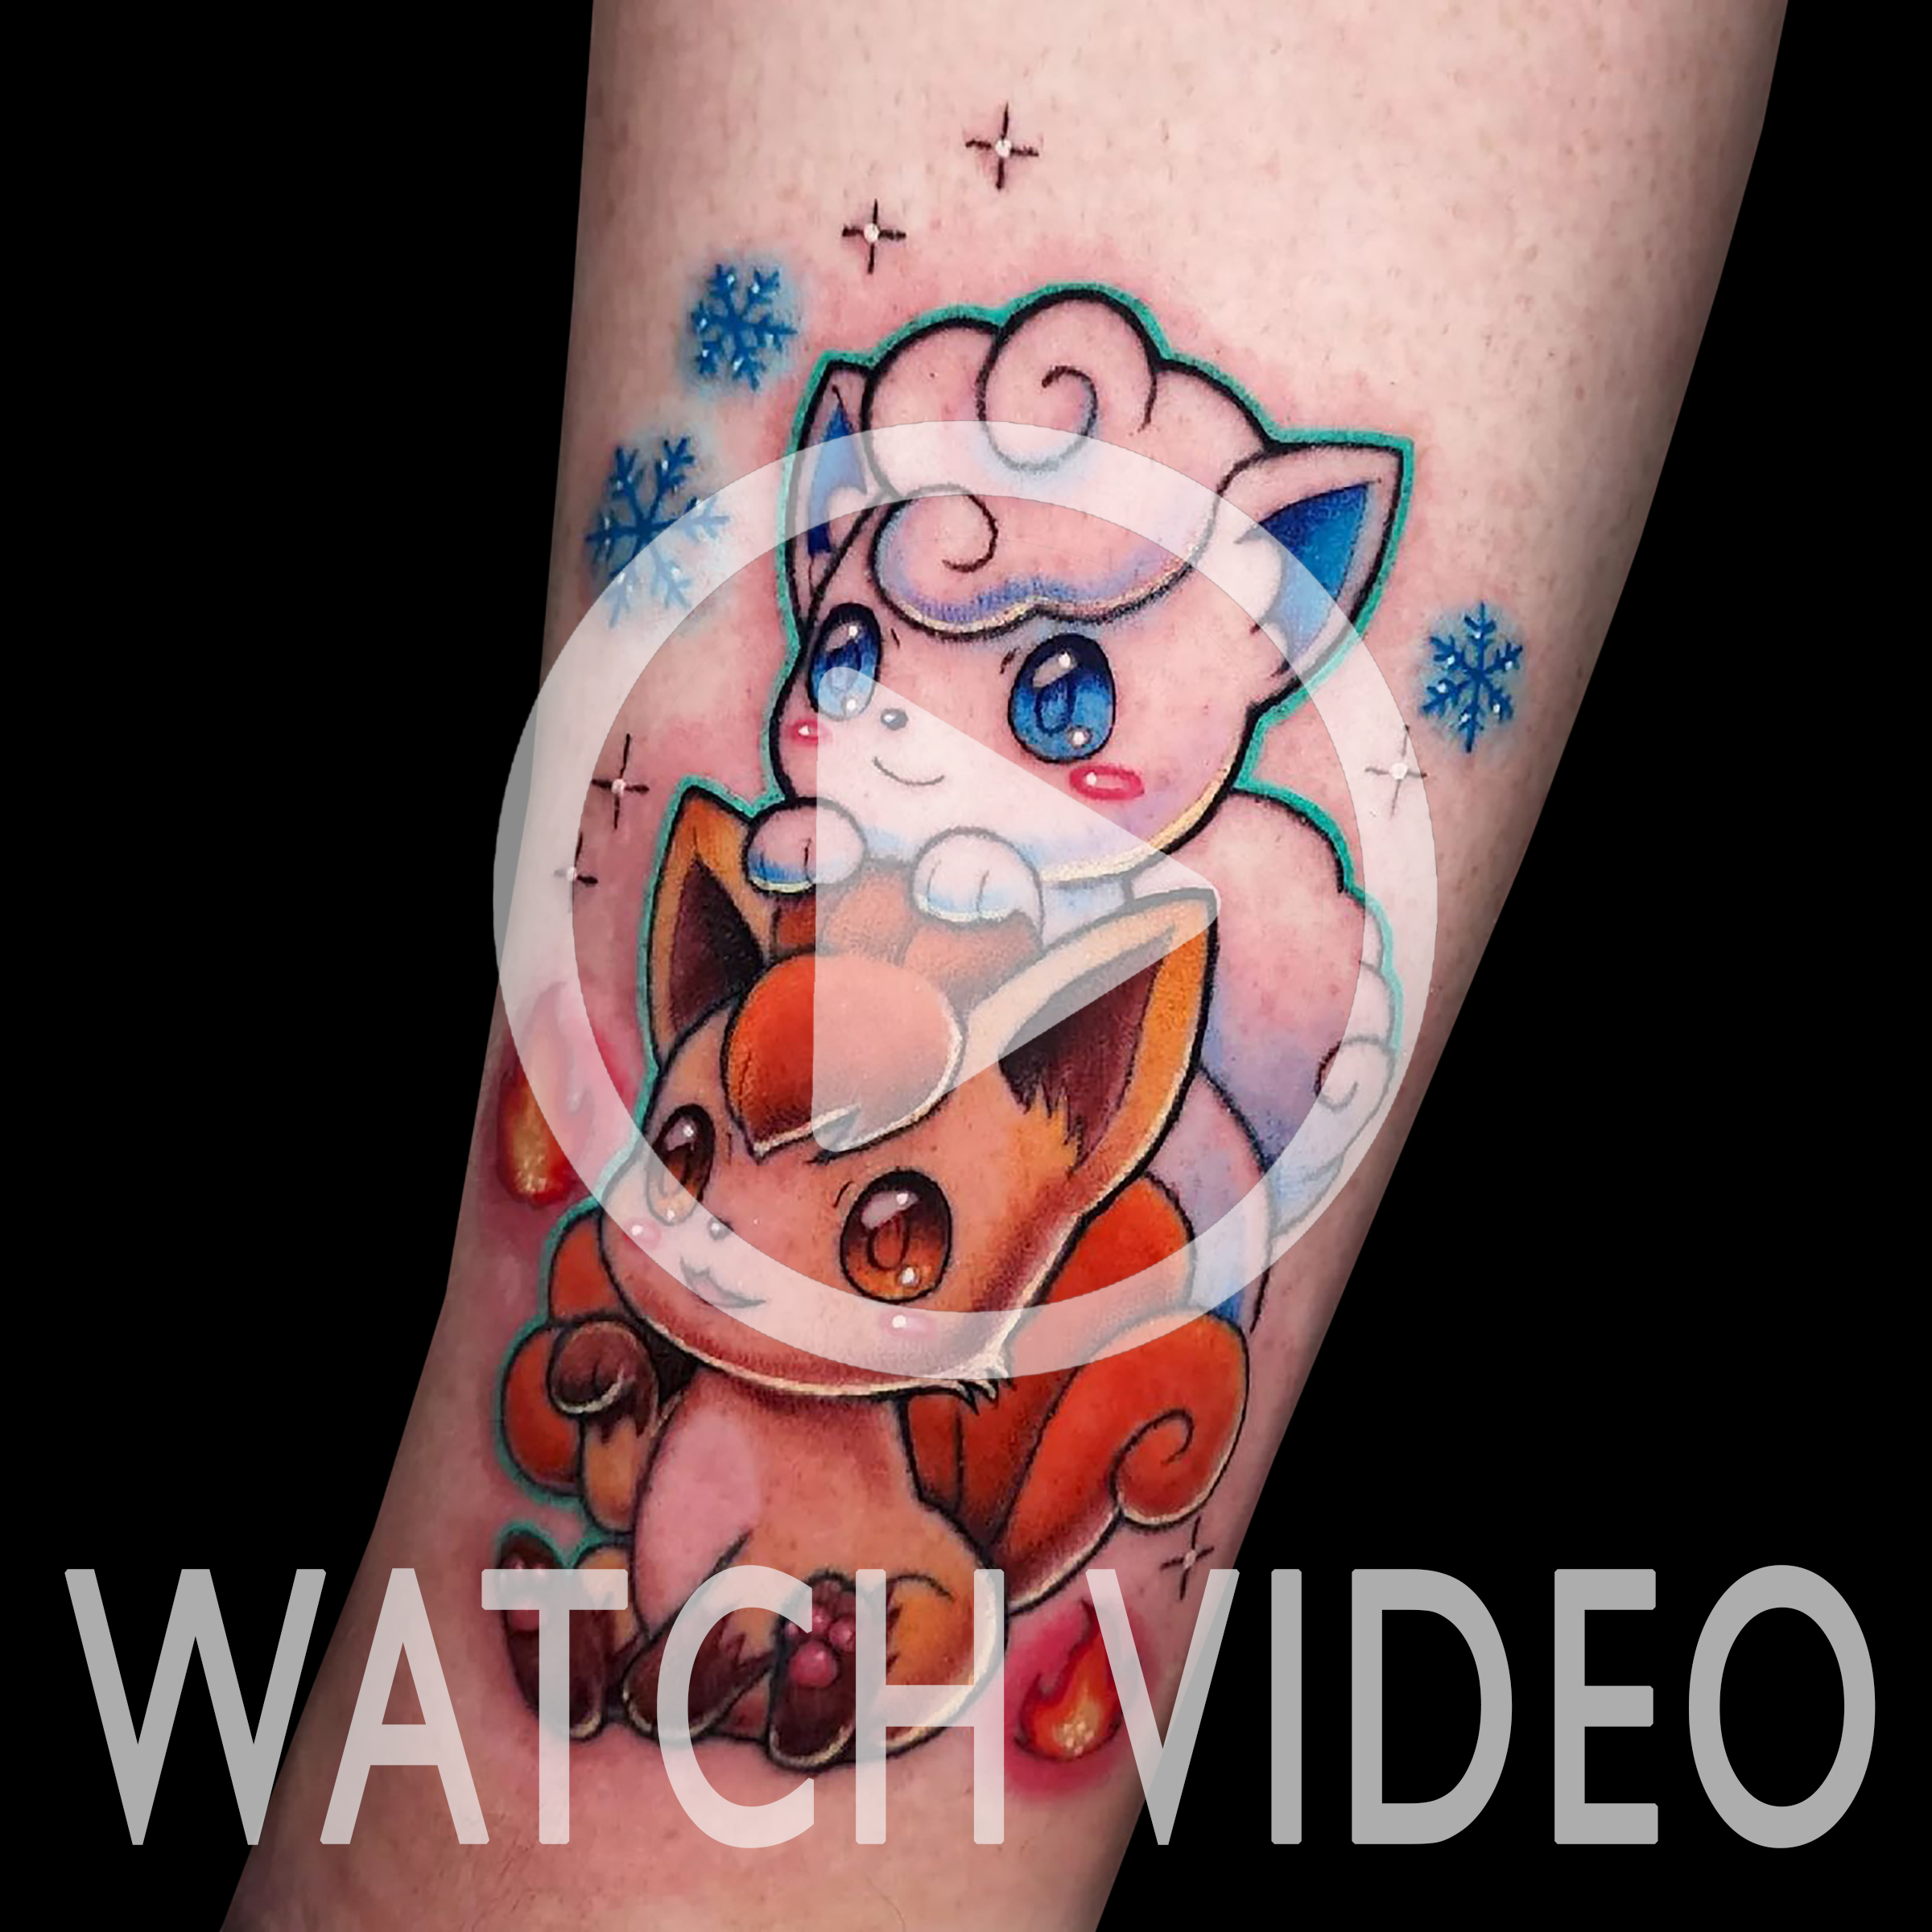 Video of new tattoo done by Nasa Tsuchiya, uploaded 02/04/2023 - -